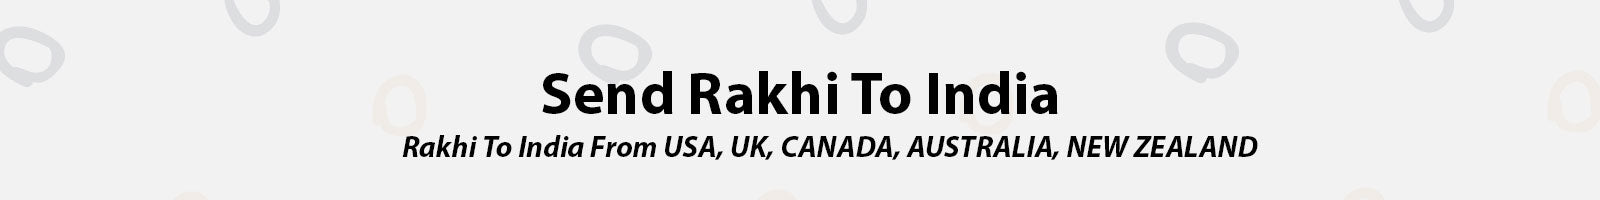 Send Rakhi To India